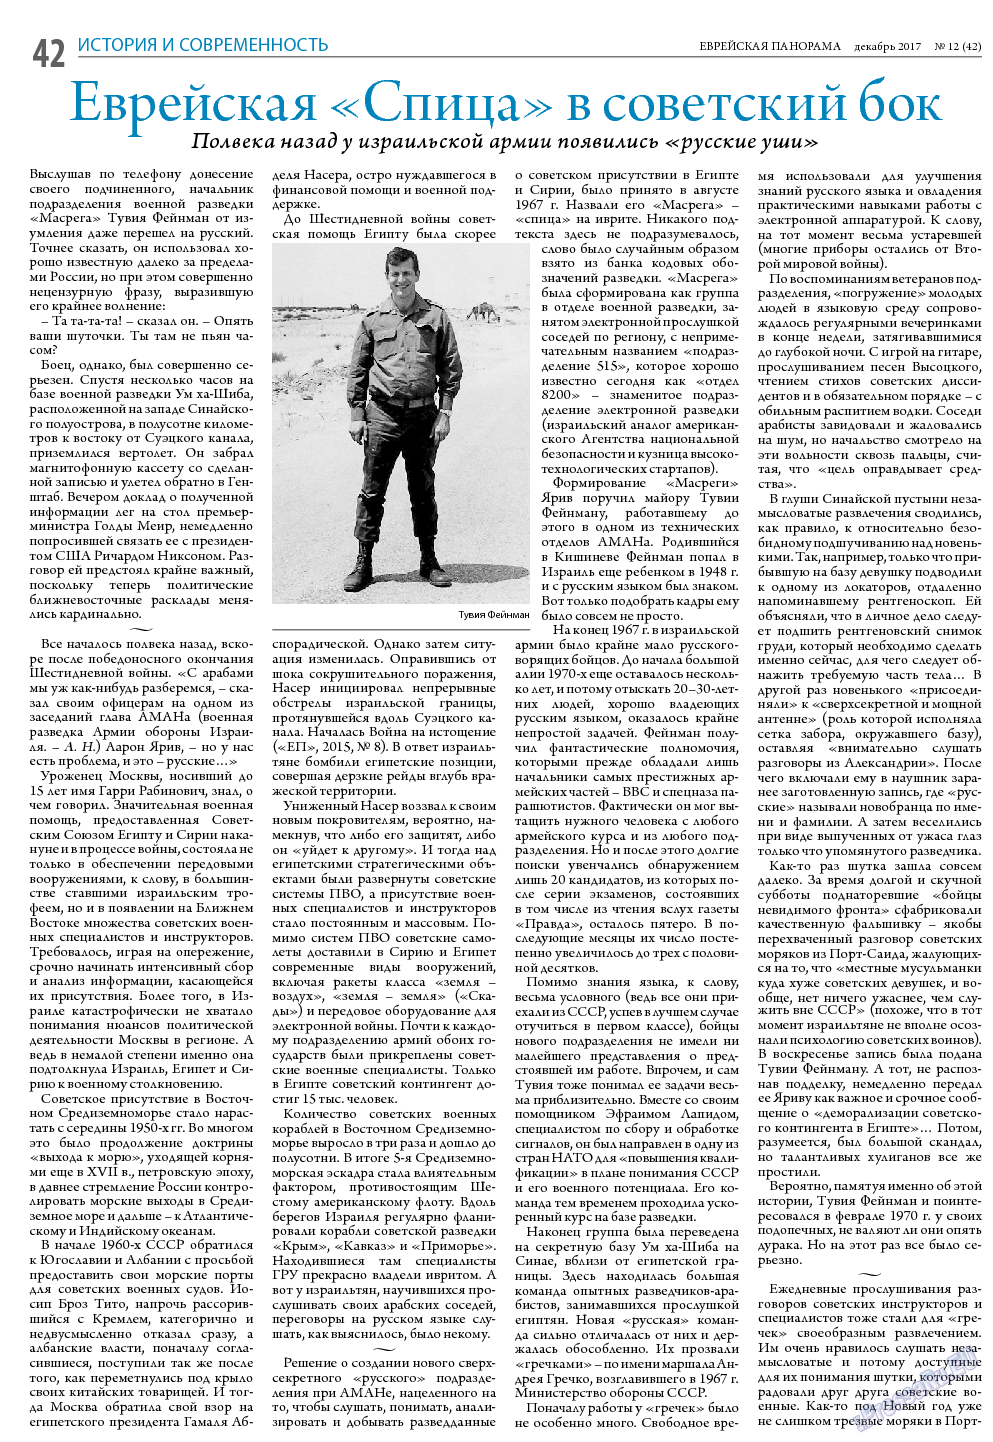 Еврейская панорама, газета. 2017 №12 стр.42